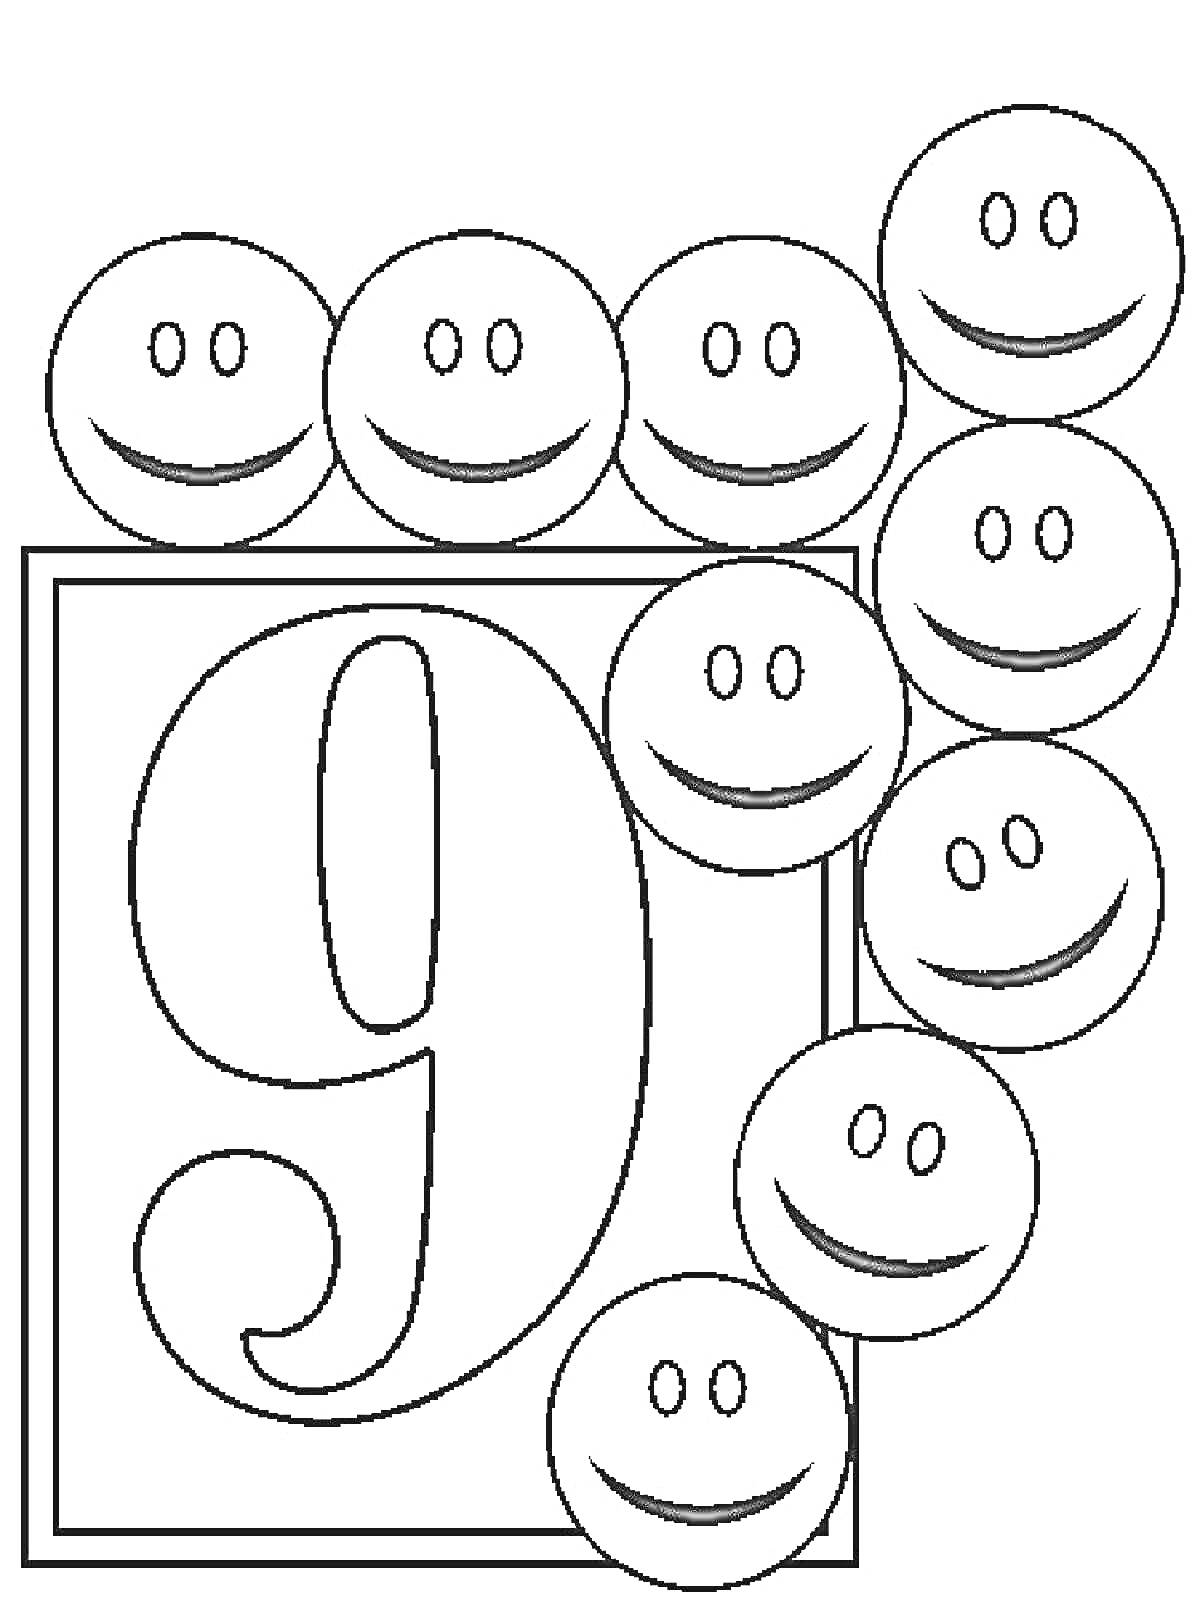 Раскраска Цифра 9 с улыбающимися смайликами